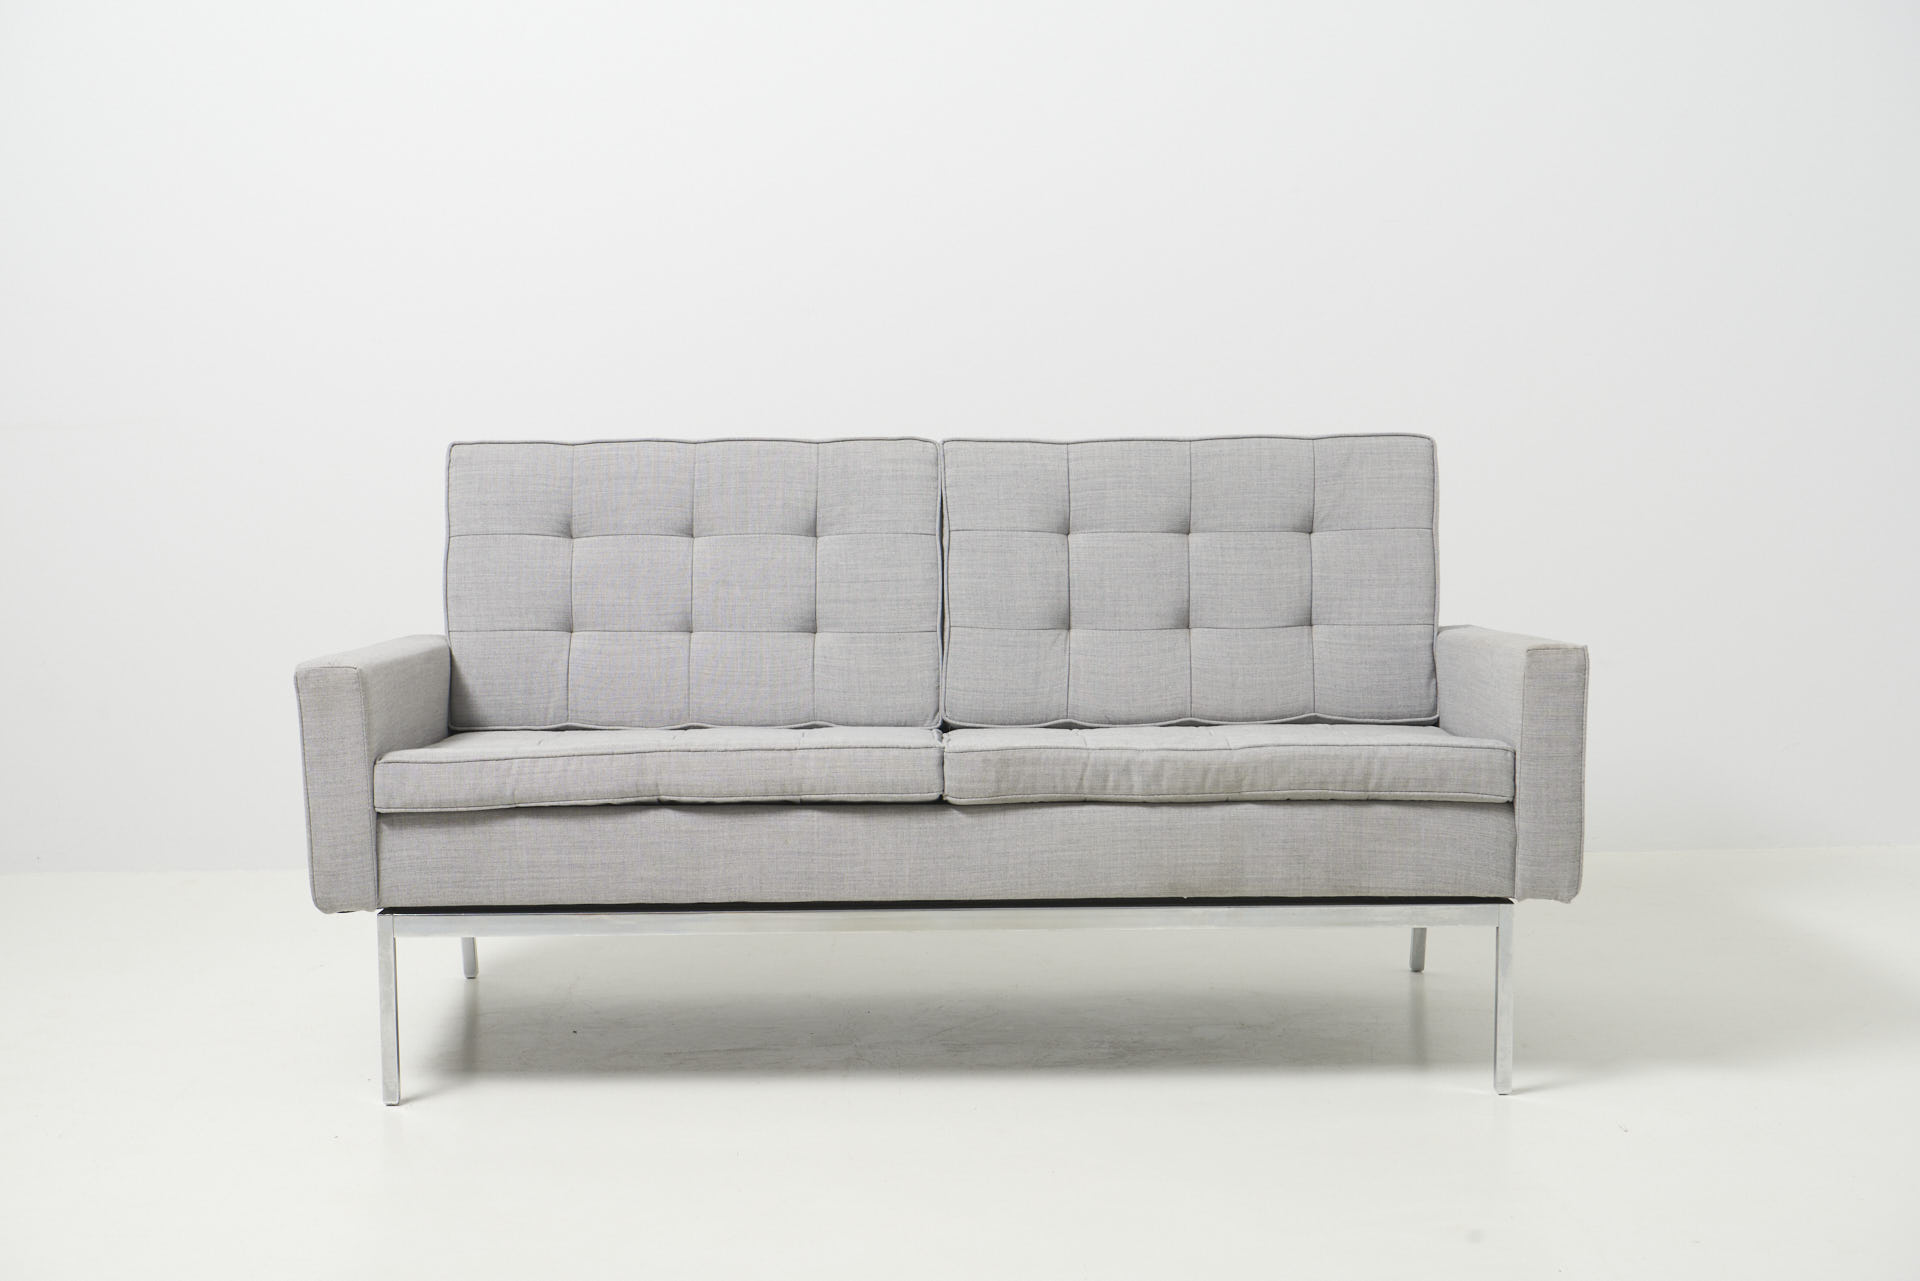 modestfurniture-vintage-3116-florence-knoll-2-seat-sofa01